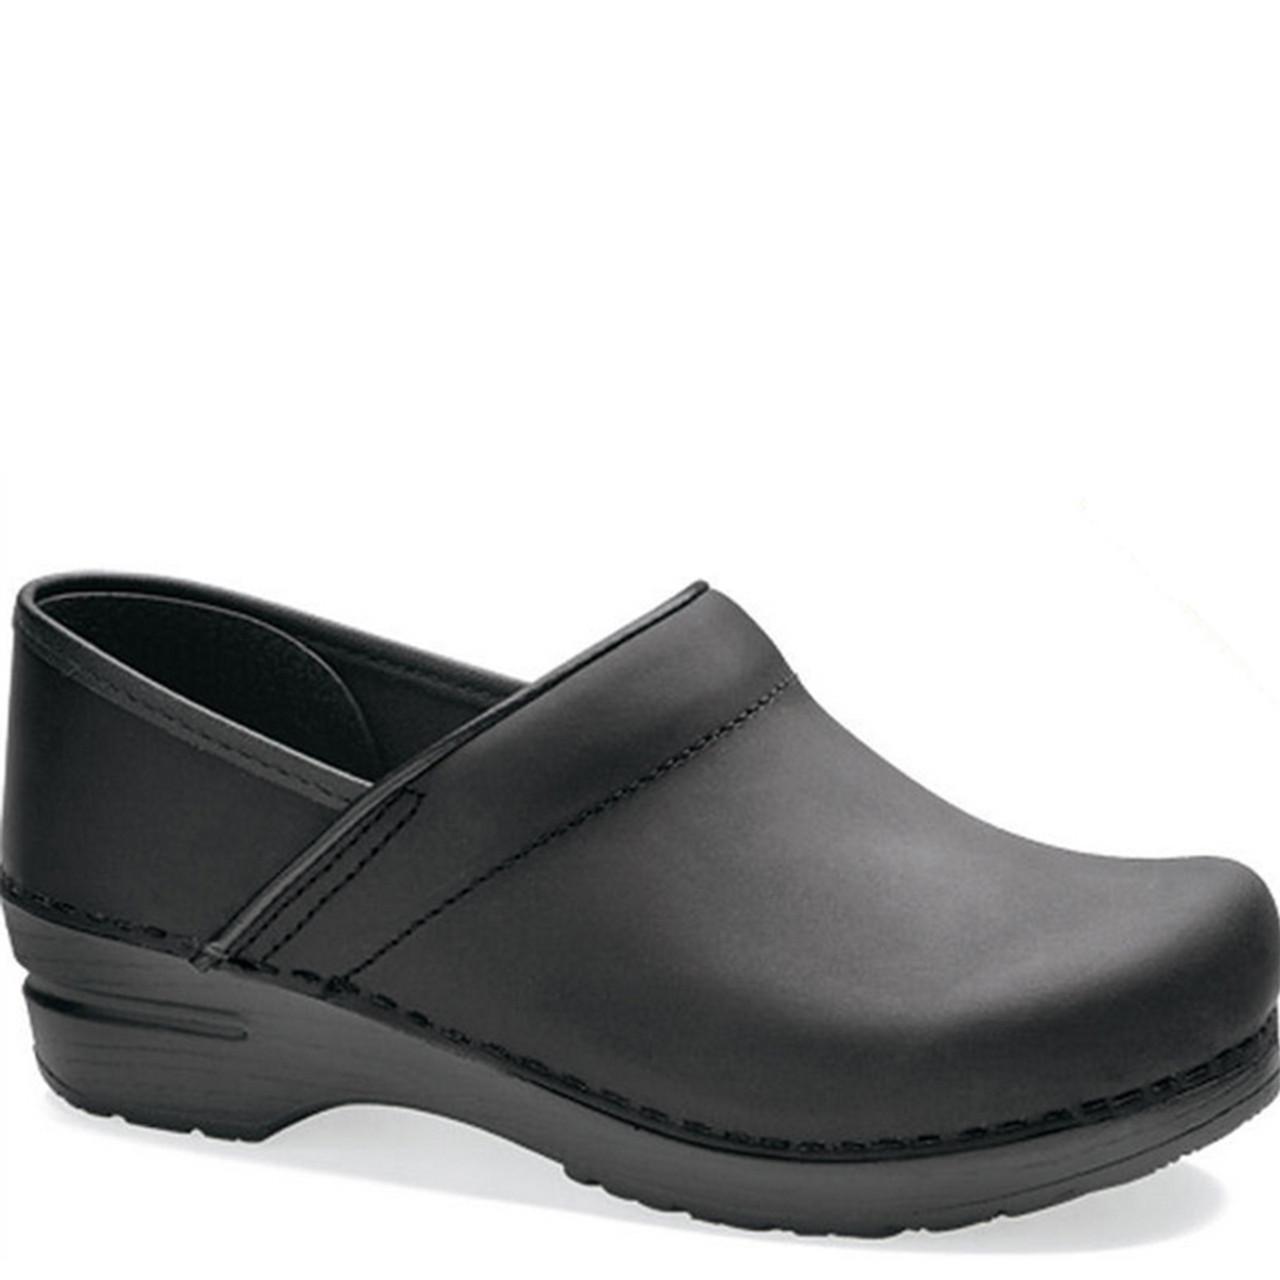 Dansko Men's BLACK OILED Professional Clogs - Family Footwear Center